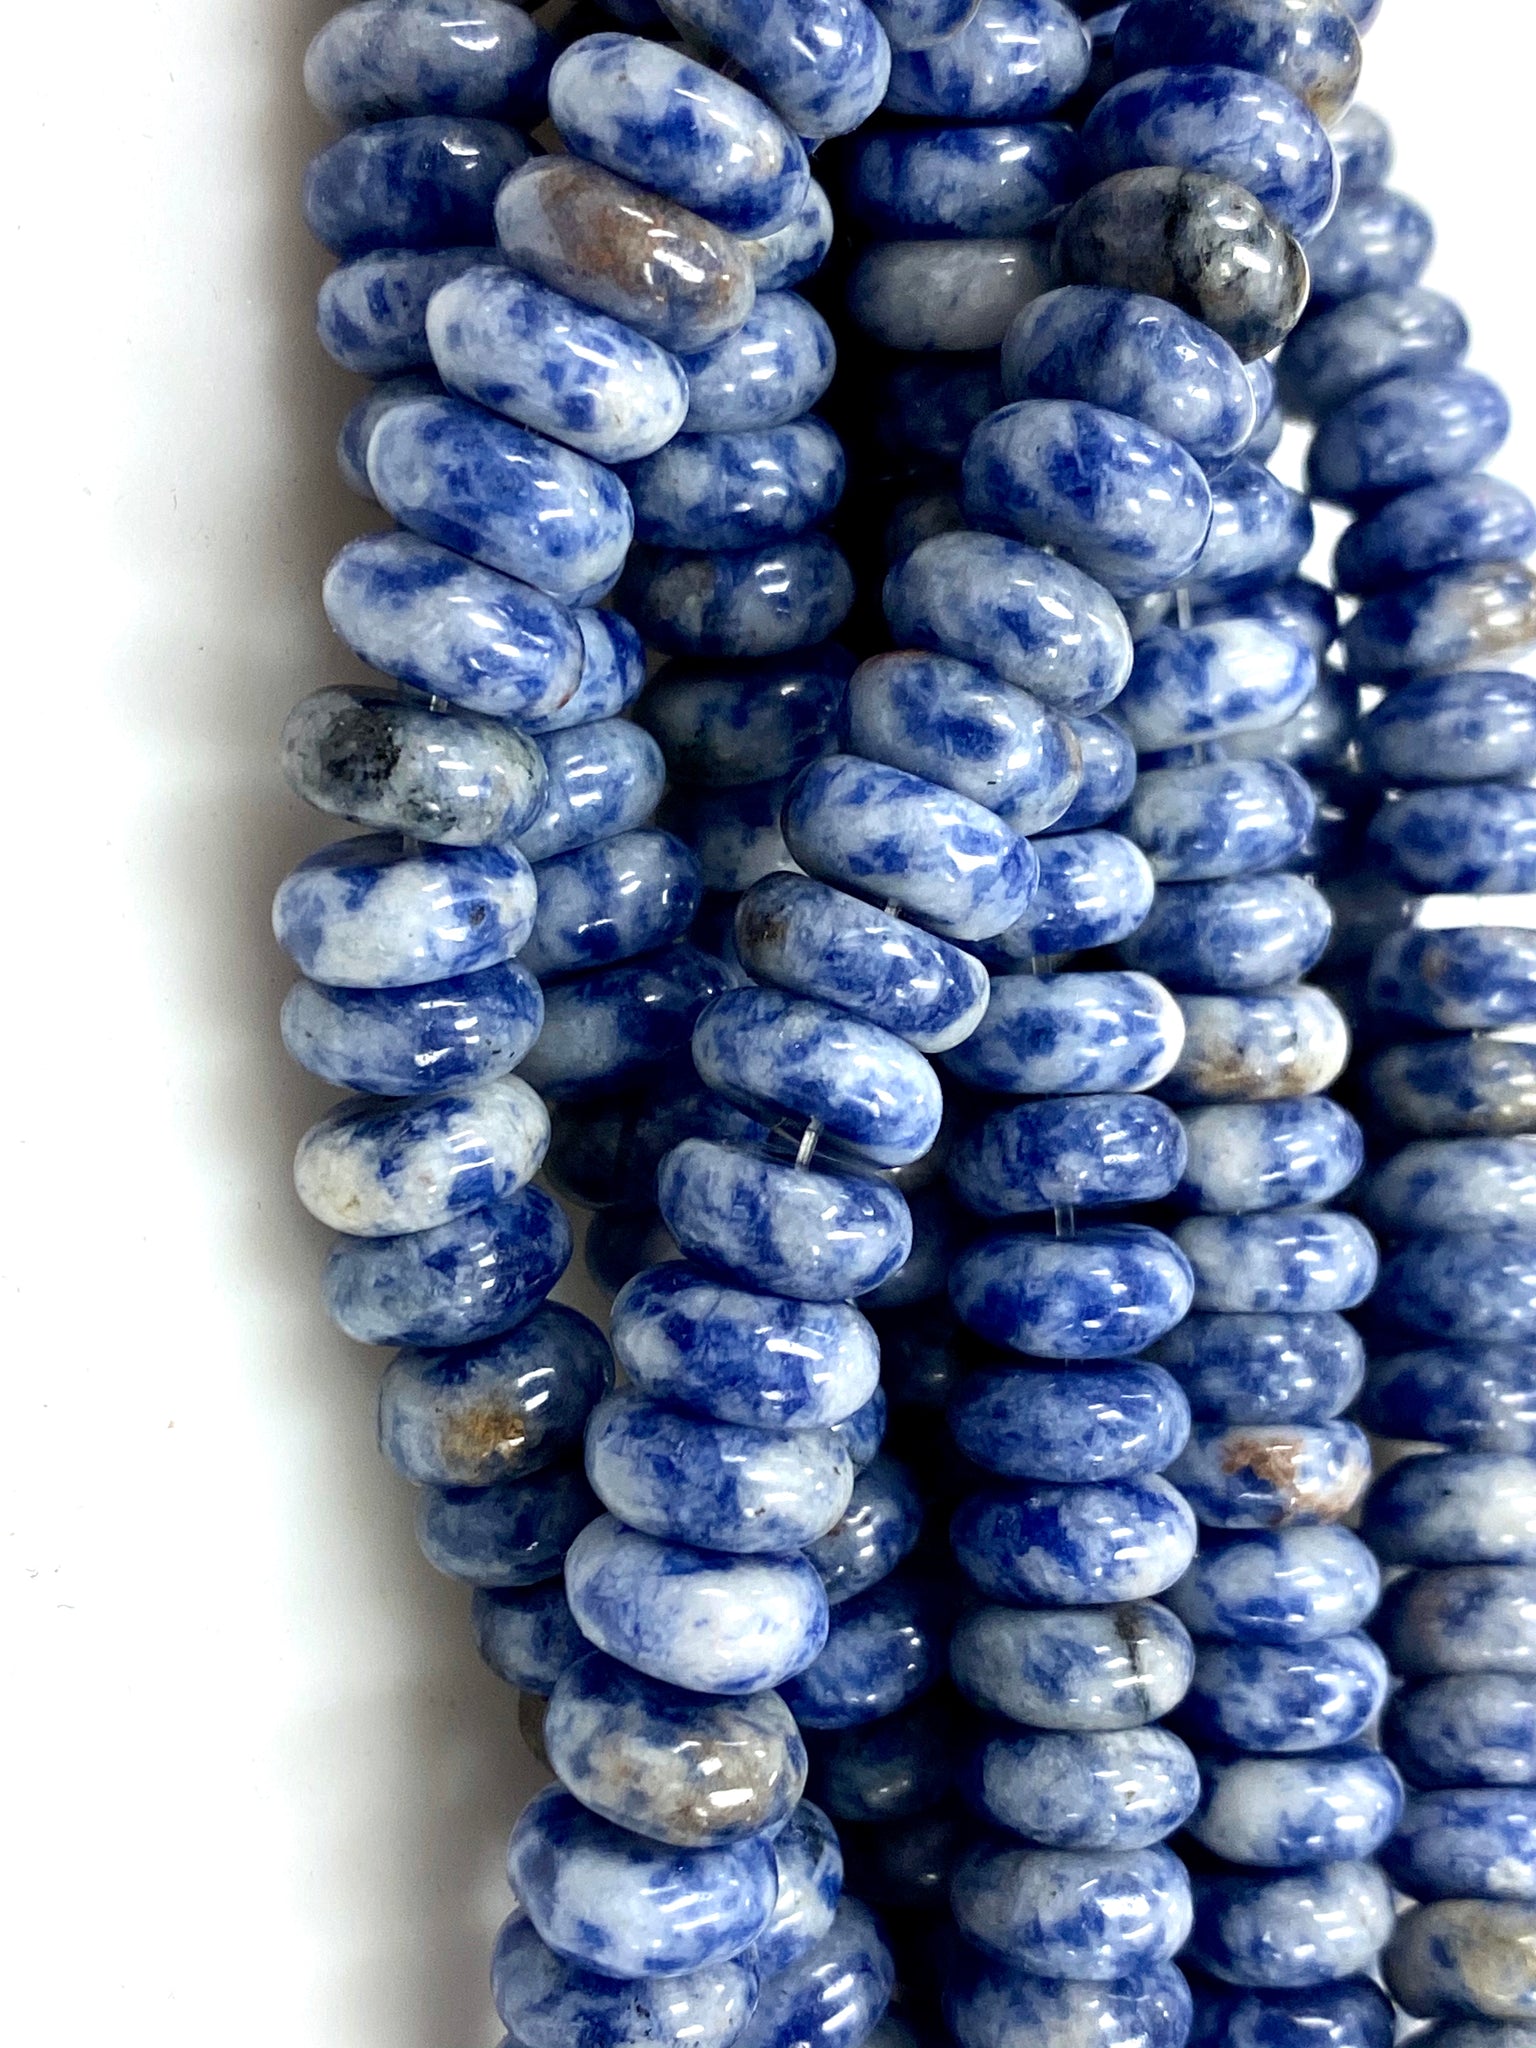 Natural Sodolite Gemstone Beads / Faceted Rondelle Shape Beads / Healing Energy Stone Beads / 10mm 2 Strand Gemstone Beads